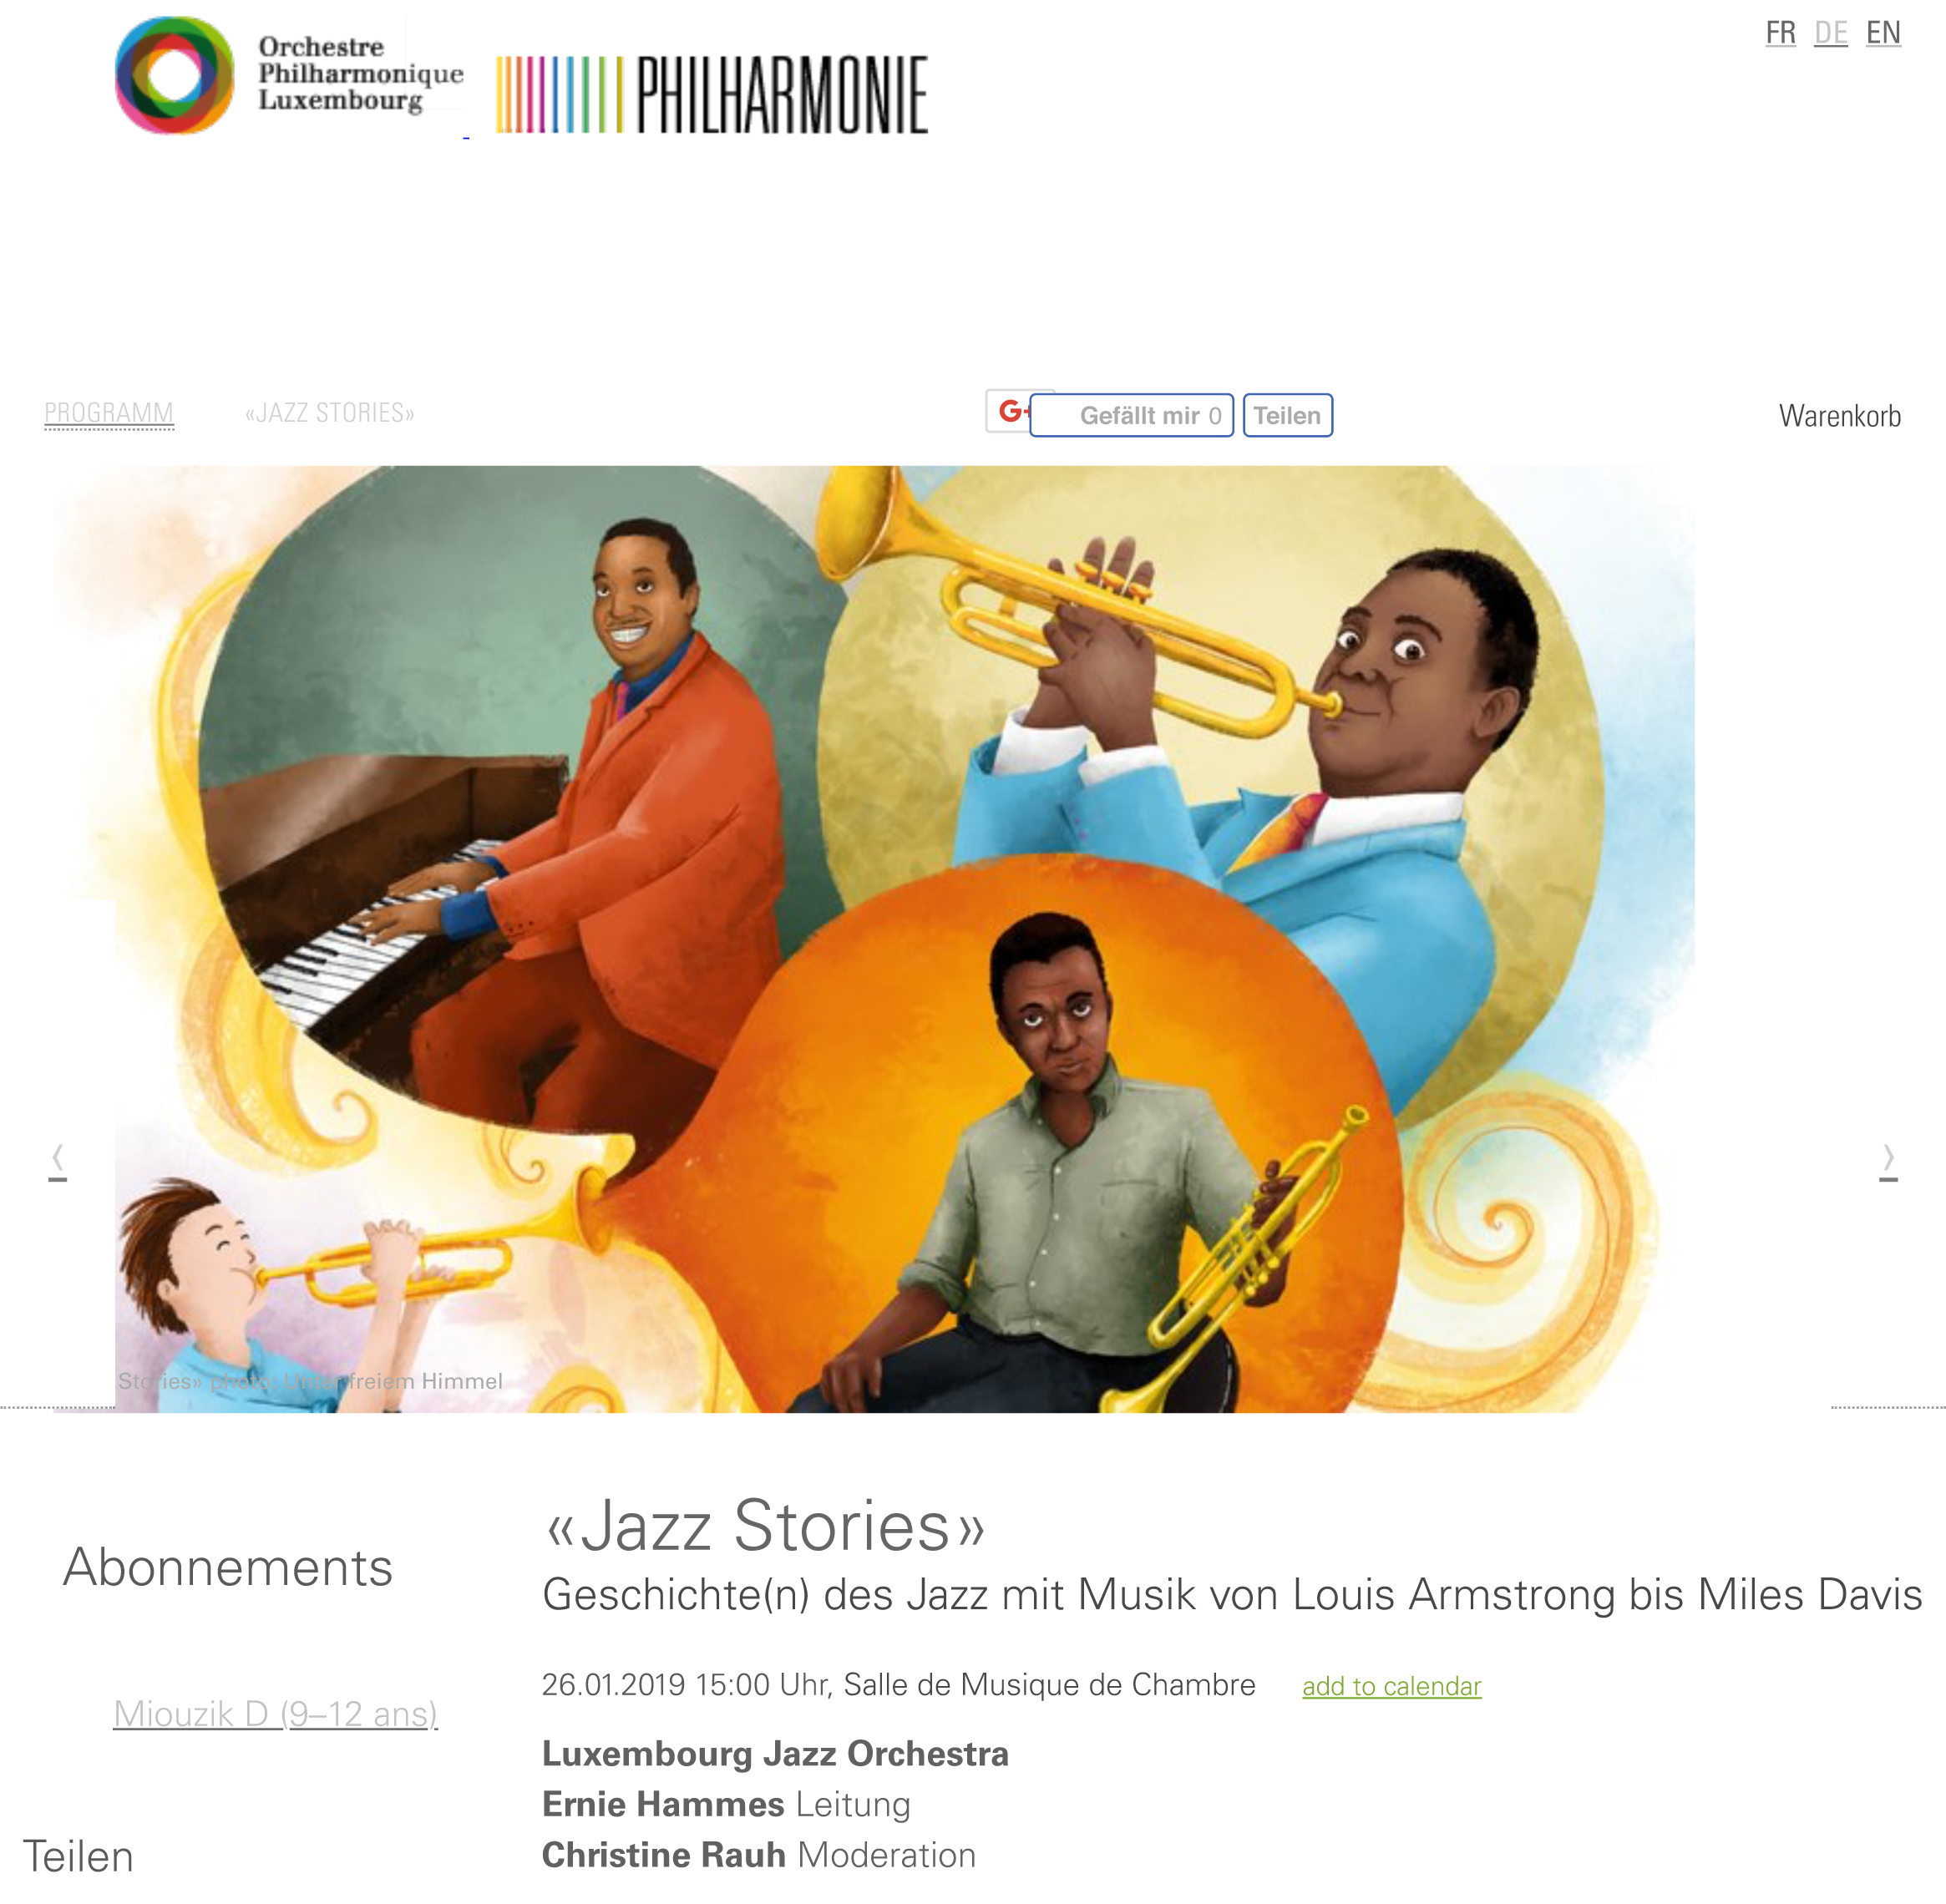 Premiere 'Jazz Stories' Philharmonie Luxembourg